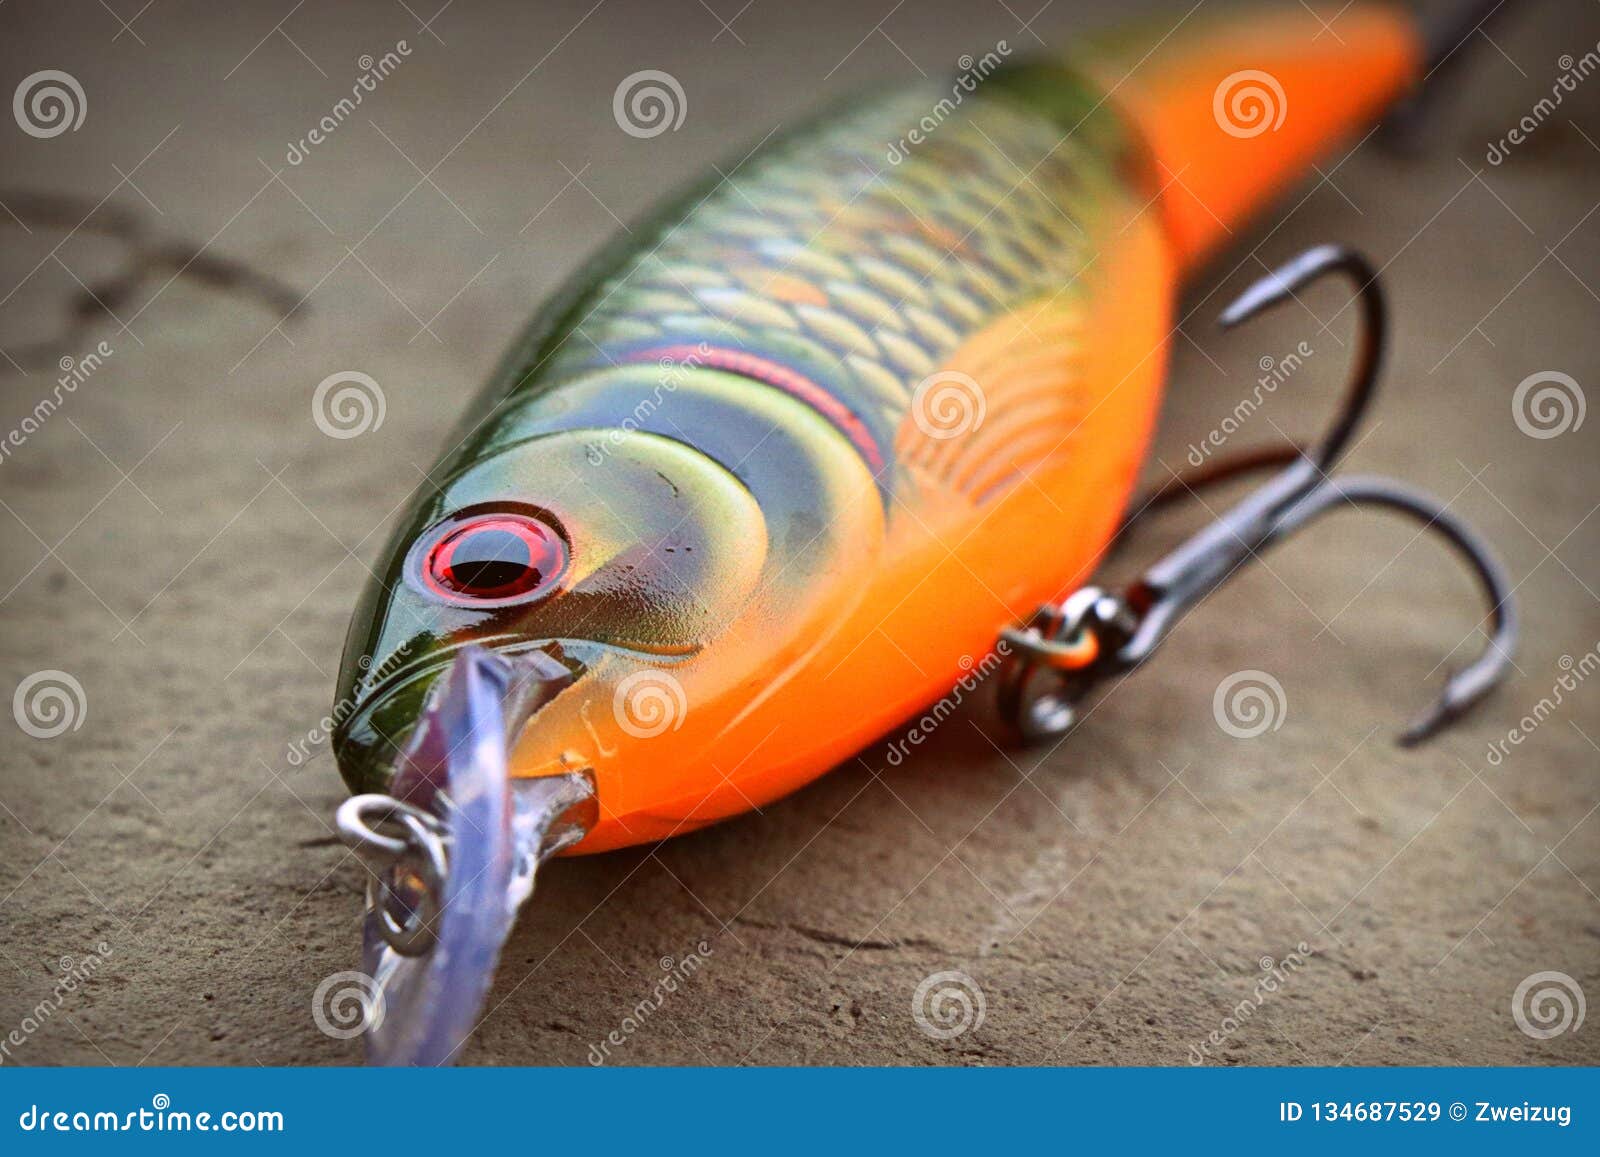 Rapala X Rap Jointed Pike Fishing Lure Plug Stock Image - Image of salmon,  running: 134687529